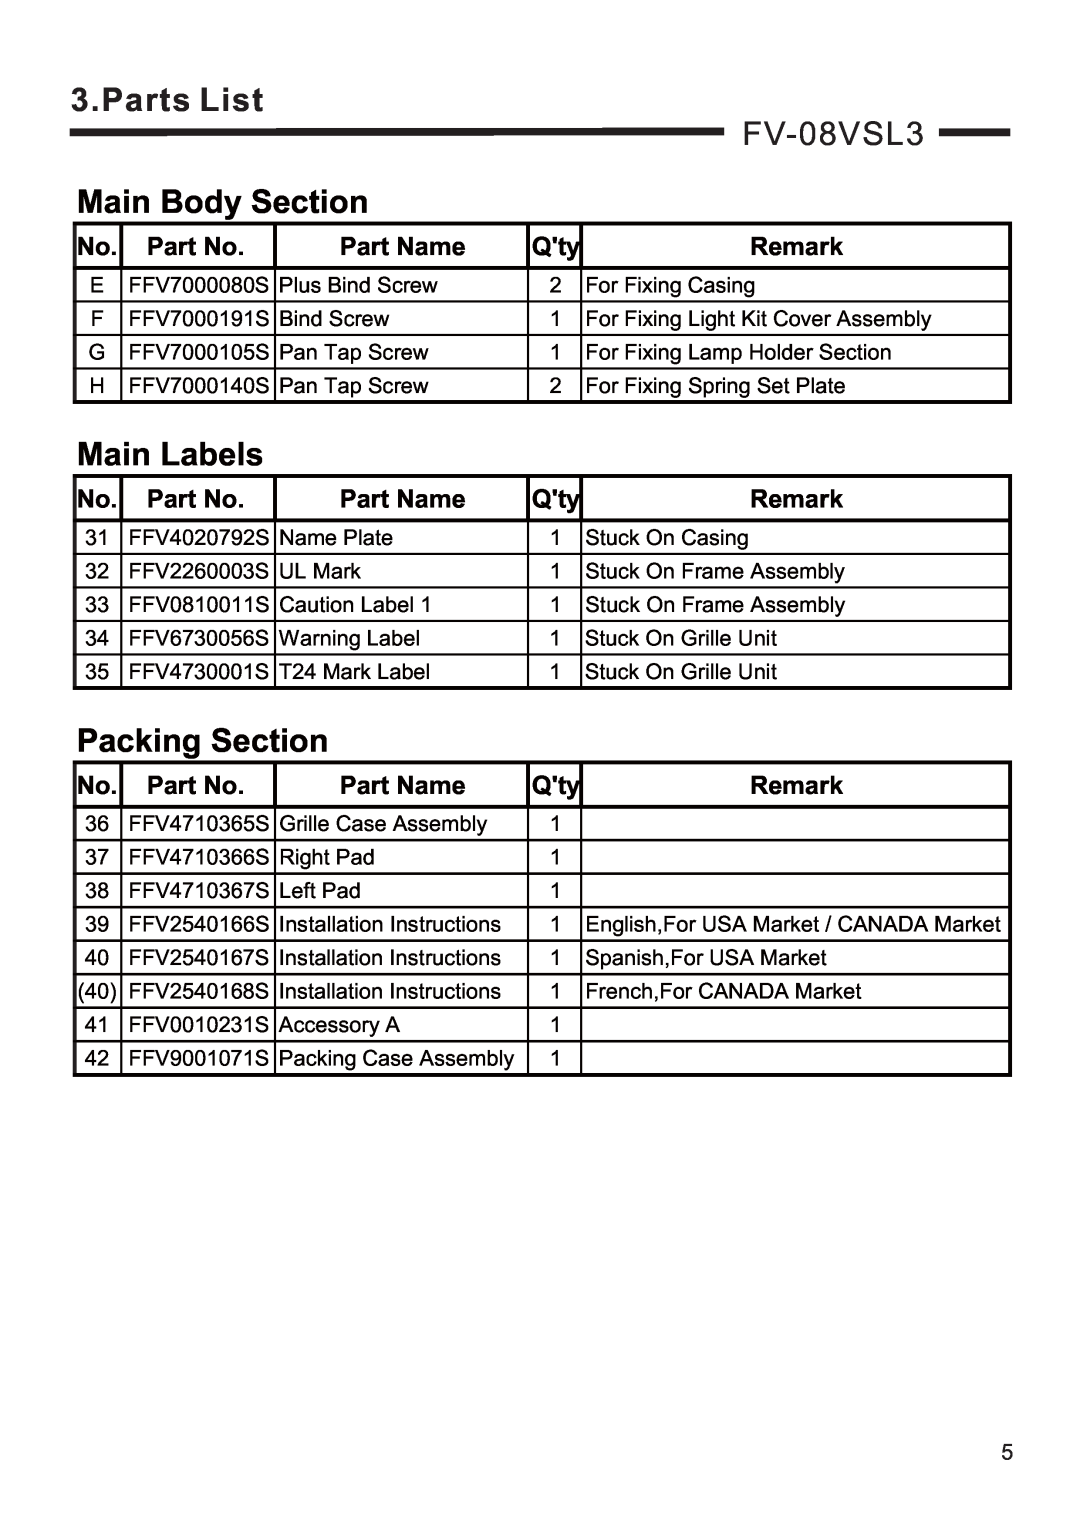 Panasonic FV-10VSL3 Main Labels, Packing Section, Parts List, Main Body Section, FV-08VSL3, Part Name, Remark 